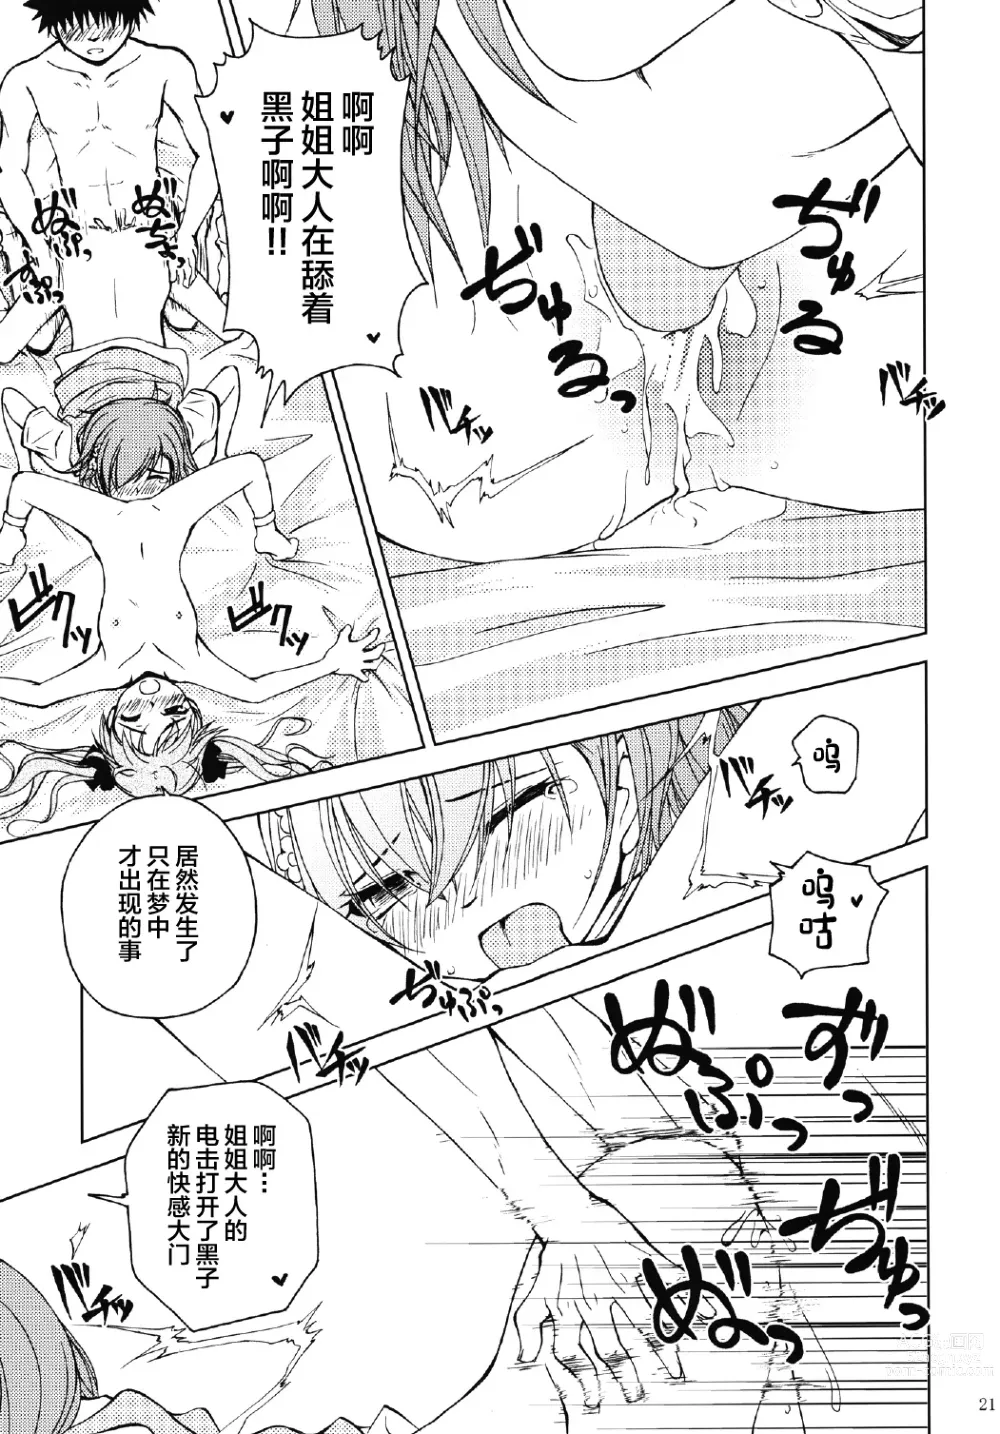 Page 21 of doujinshi Onee-sama o Ruijinen to Sememakuri desu no!!